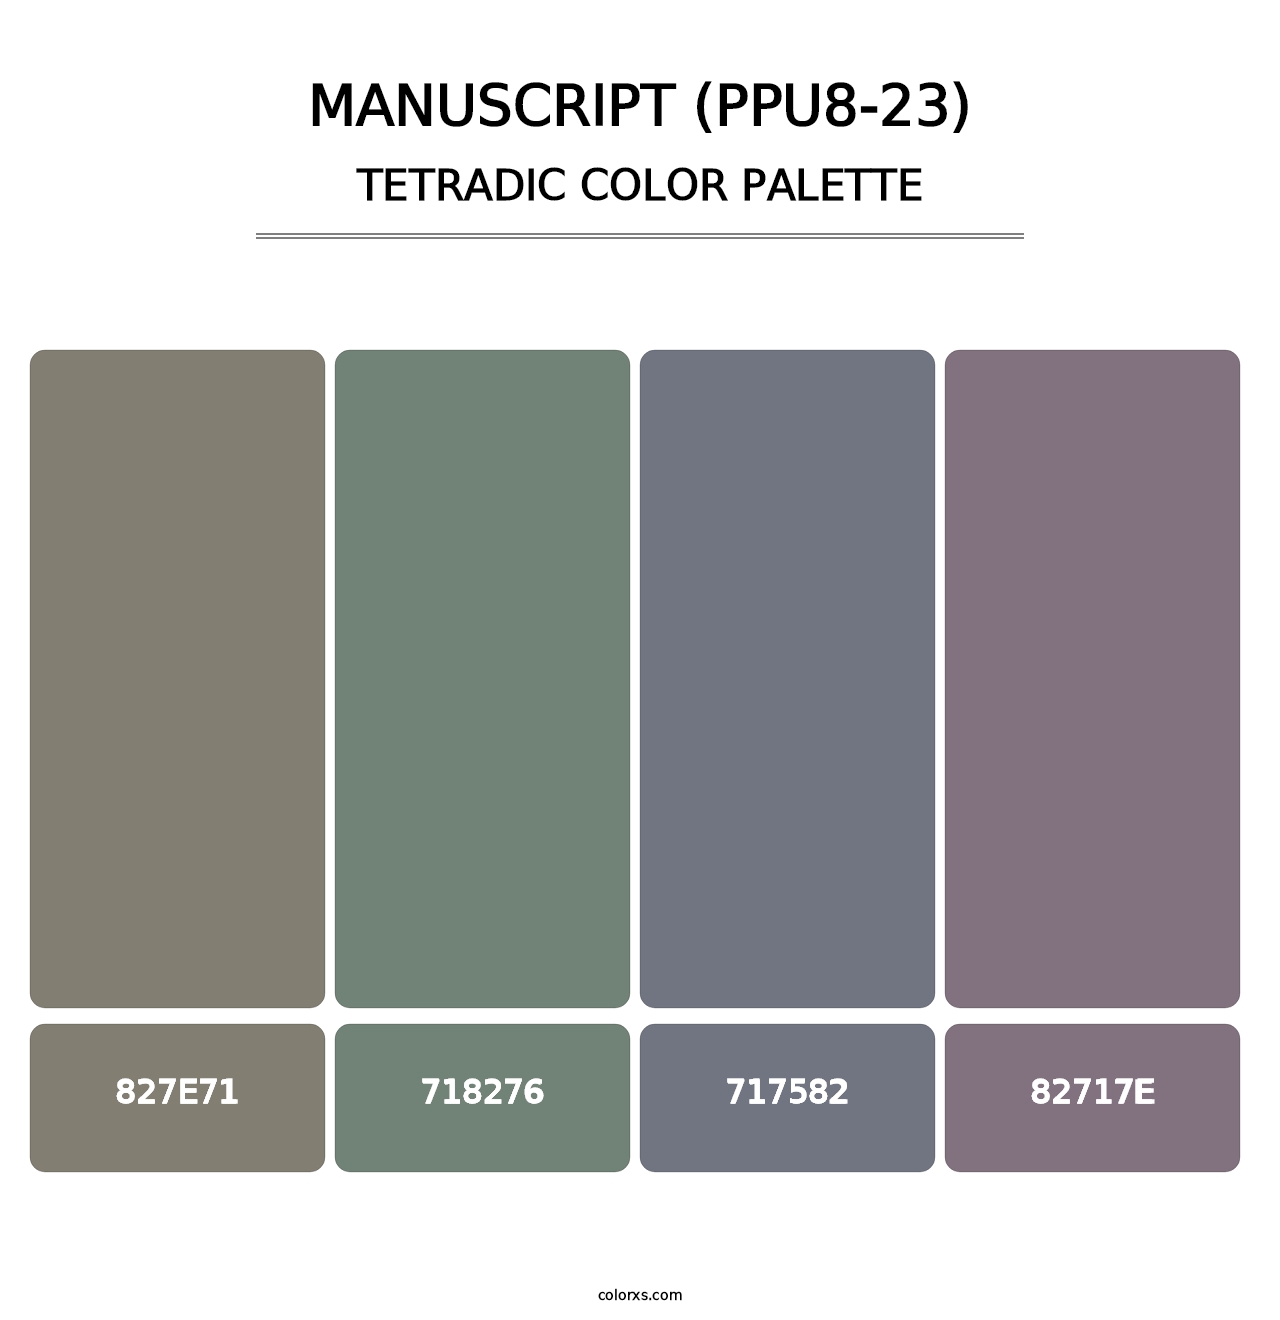 Manuscript (PPU8-23) - Tetradic Color Palette